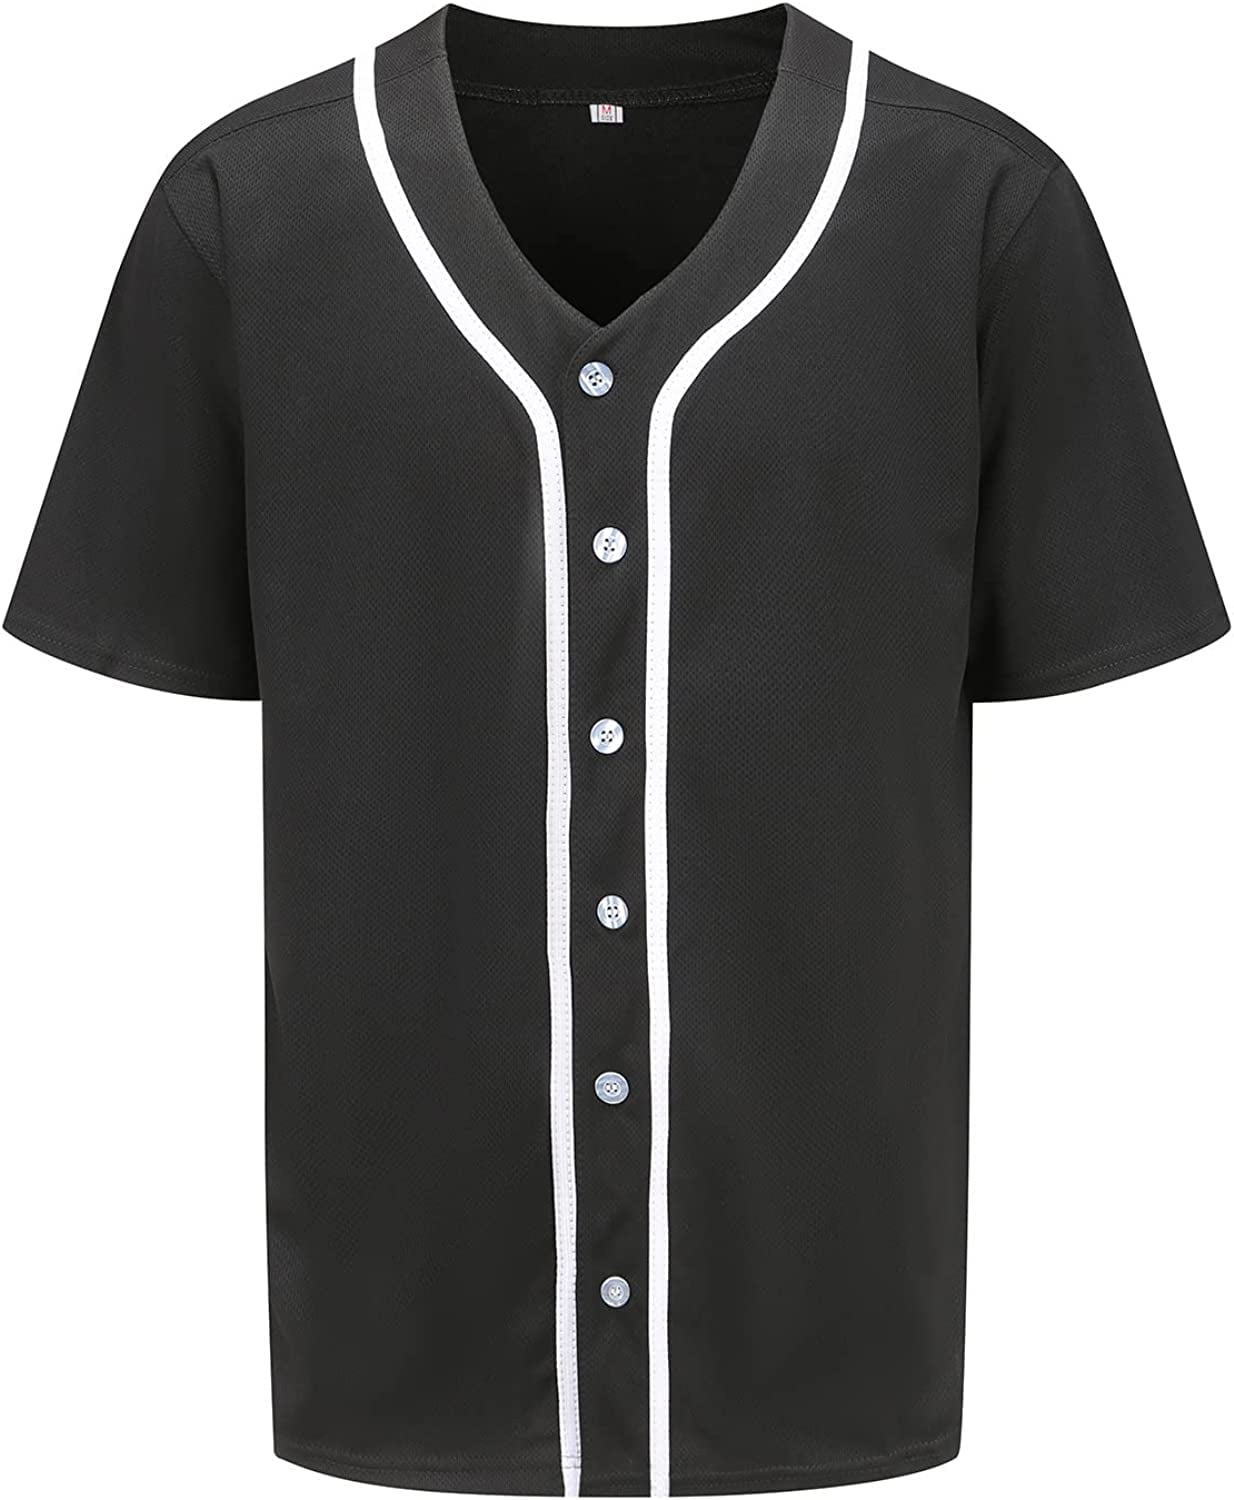 YOUI-GIFTS Mens Button Down Baseball Jersey, Blank Softball Team Uniform,  Hip Hop Hipster Short Sleeve Active Shirts 